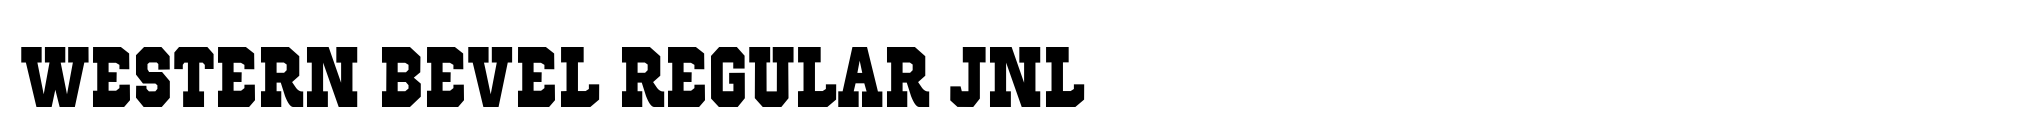 Western Bevel Regular JNL image